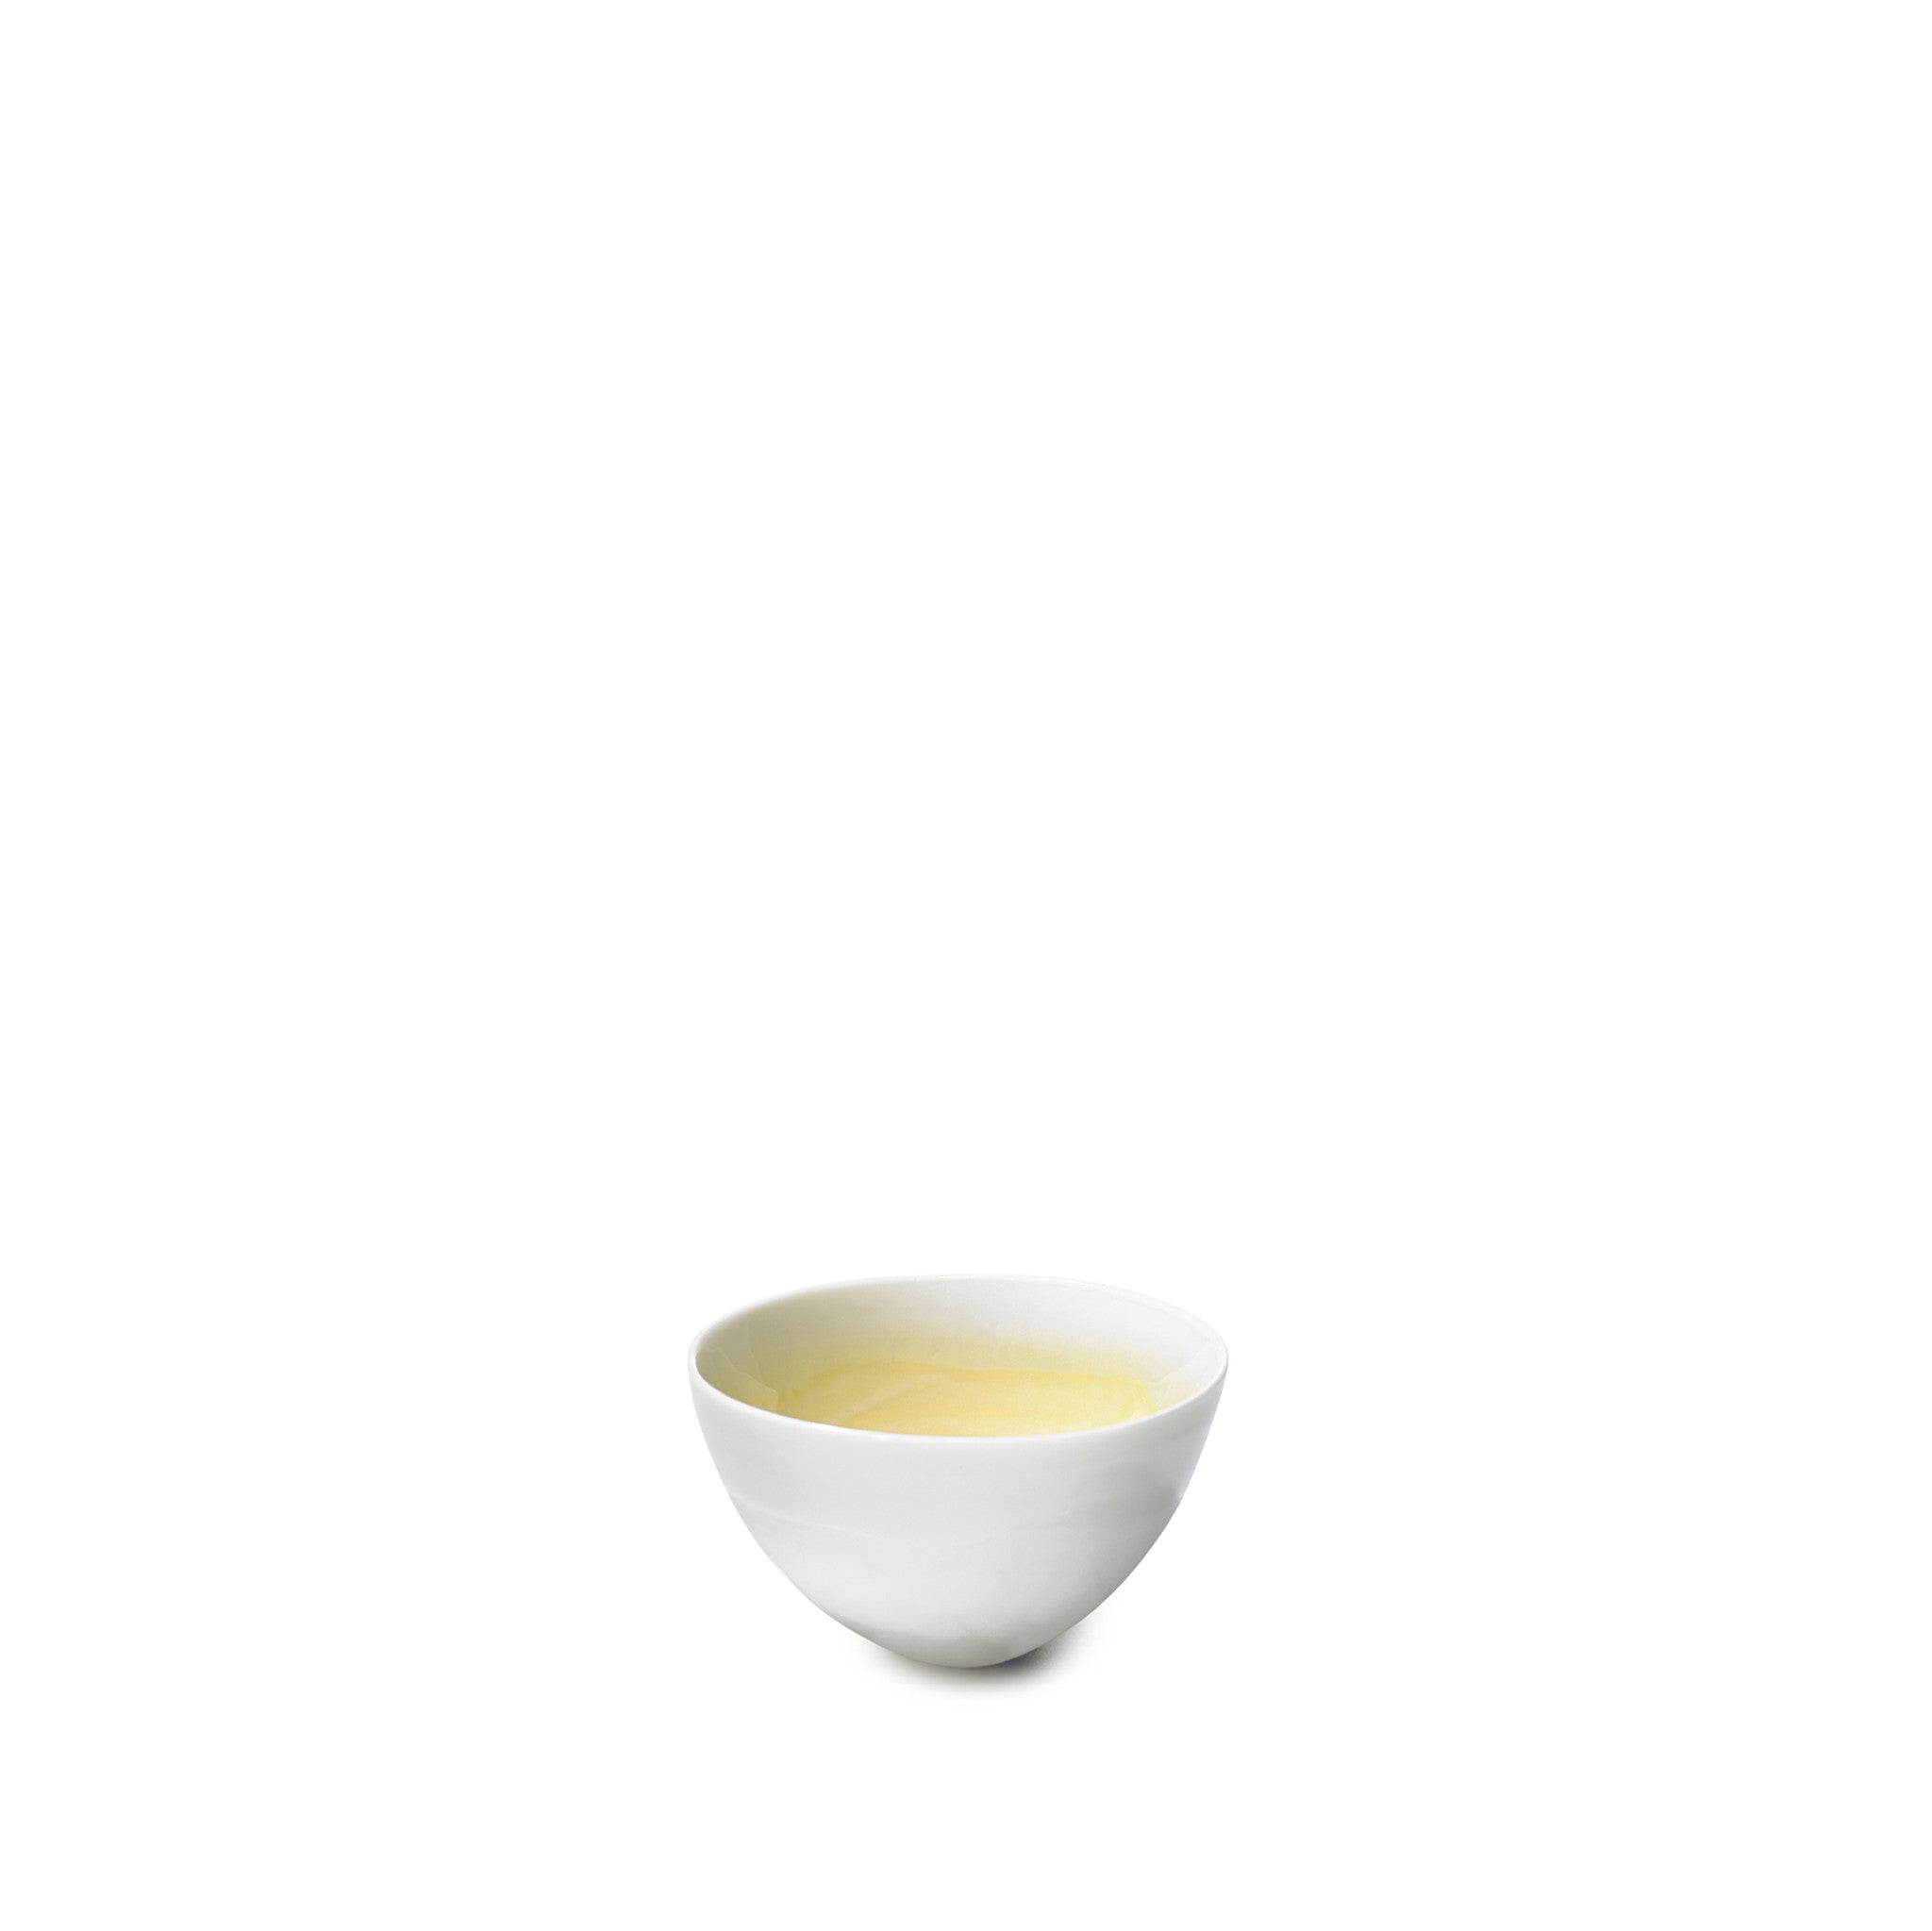 Small Yellow Porcelain Bowl with White Edge, 8cm